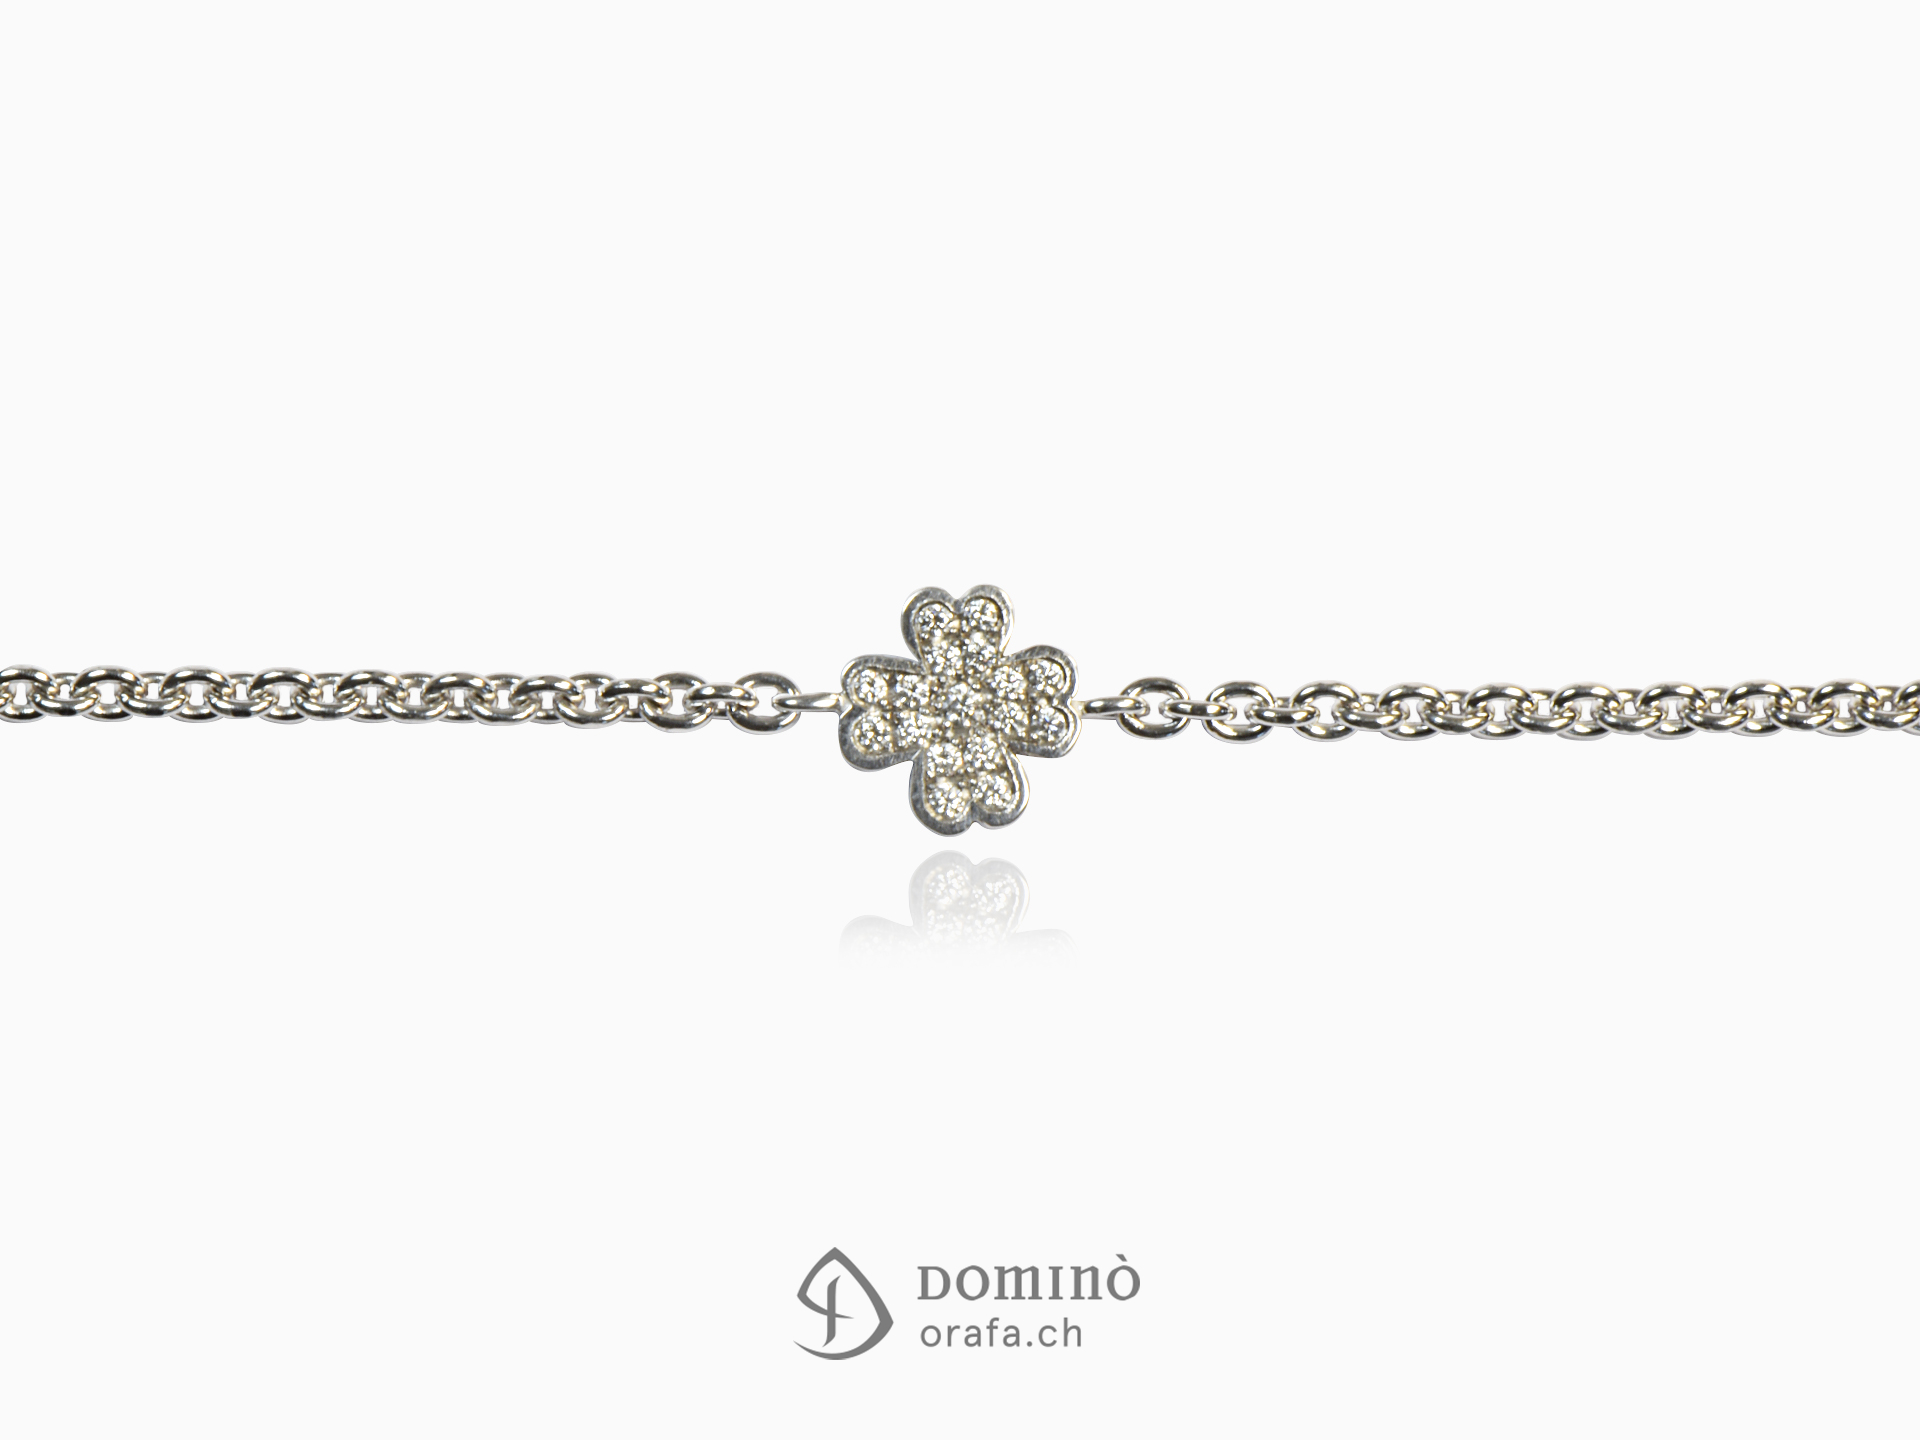 Four leaf clover bracelet with diamonds